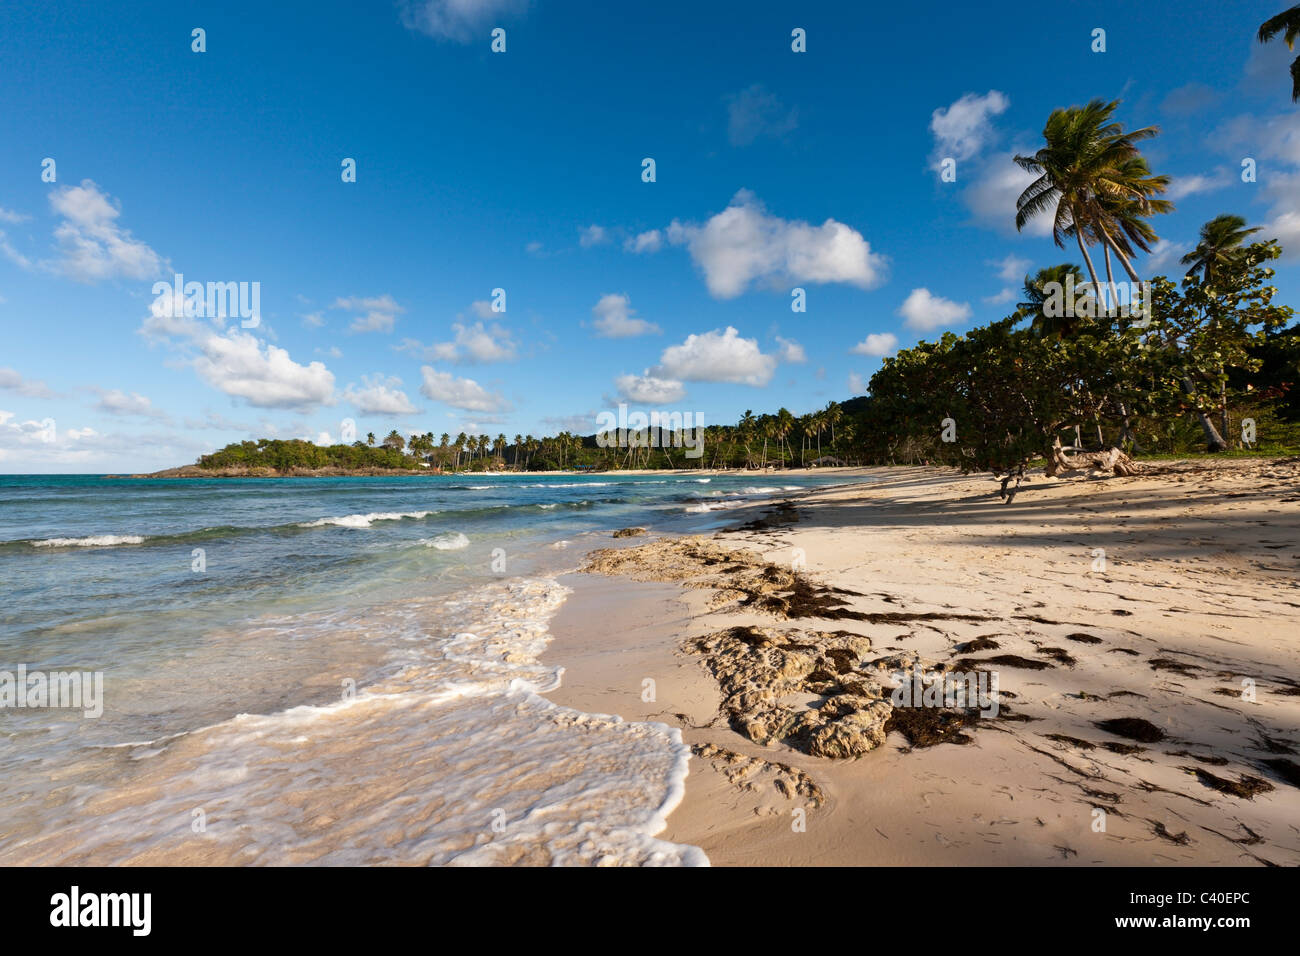 Playa Rincon Beach near Las Galeras, Samana Peninsula, Dominican Republic Stock Photo